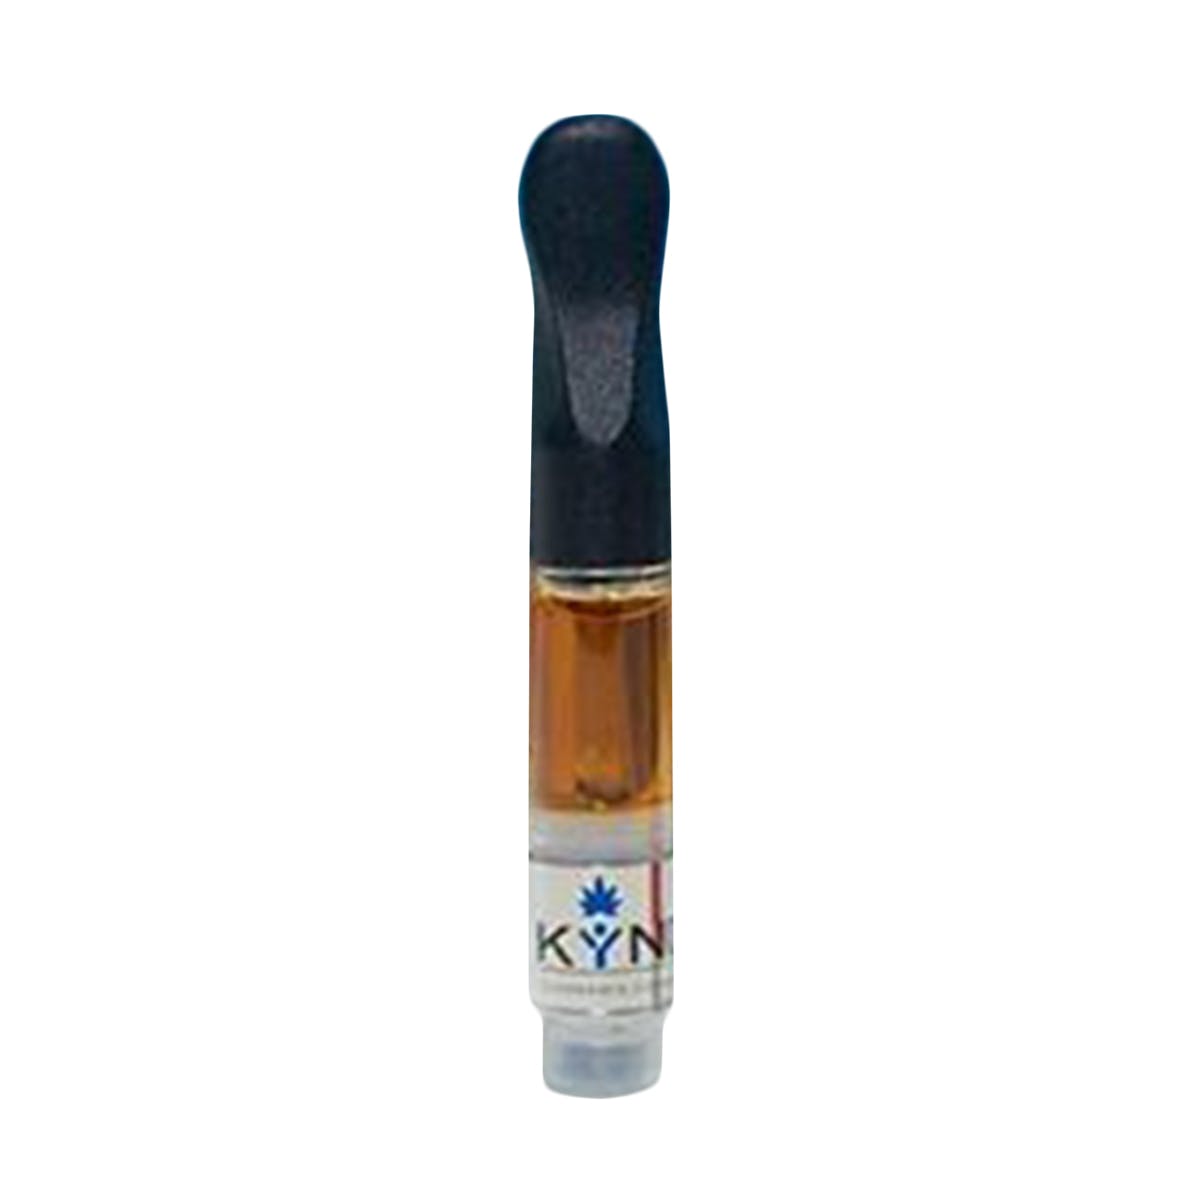 concentrate-kynd-cannabis-sour-diesel-550-mg-vape-pen-cartridge